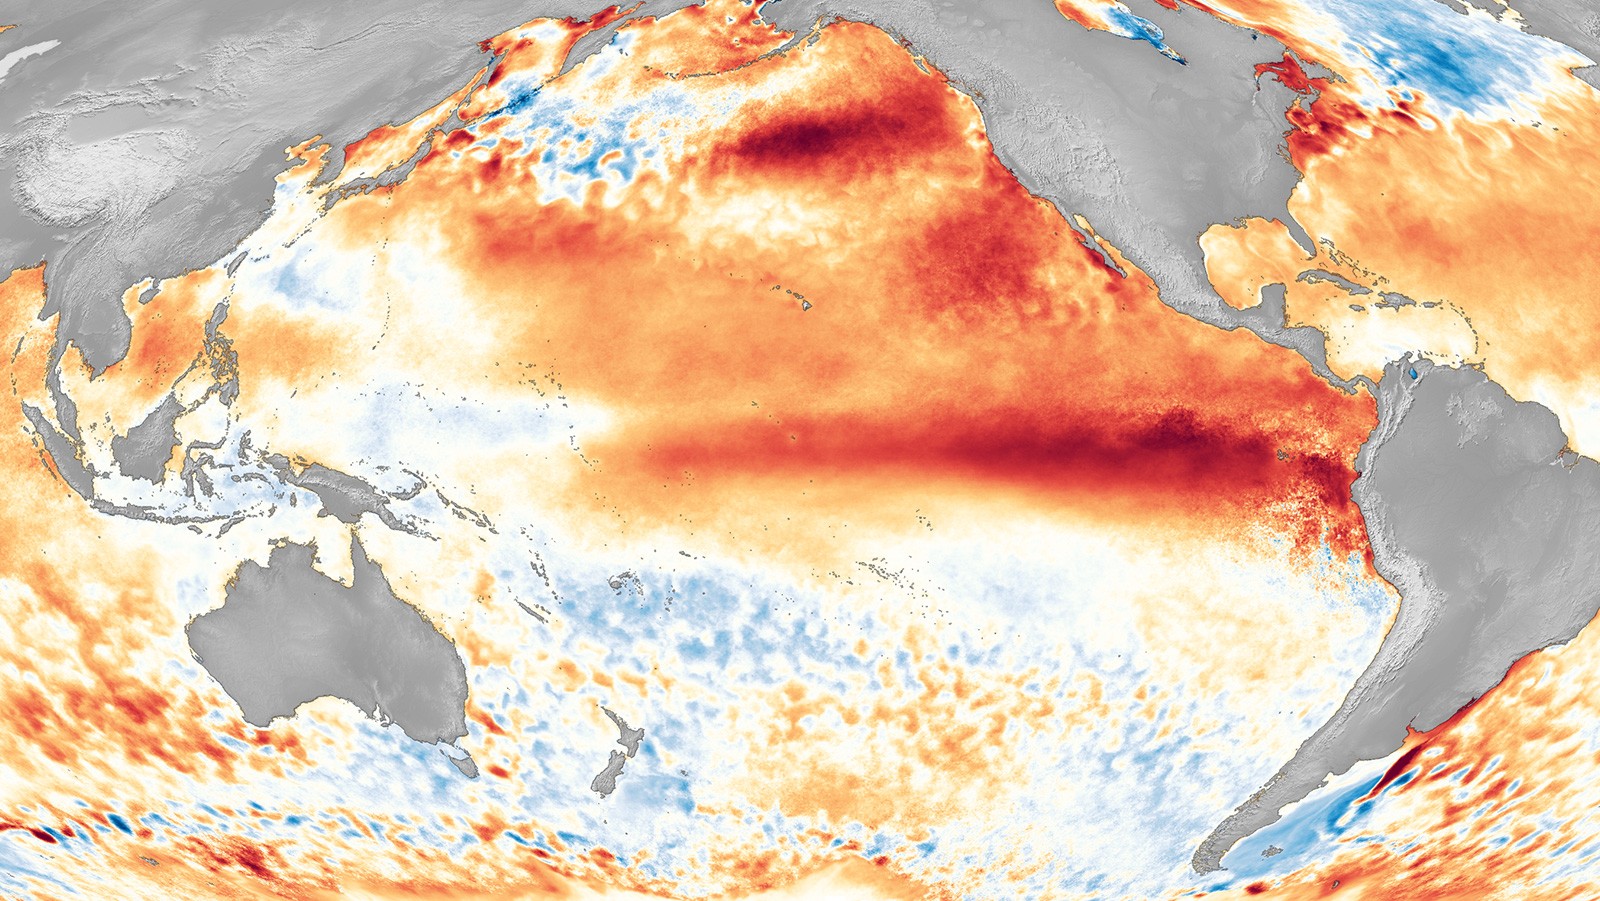 El Nino Satellite Image. Image Credit: NOAA National Environmental Satellite, Data, and Information Service (NESDIS)